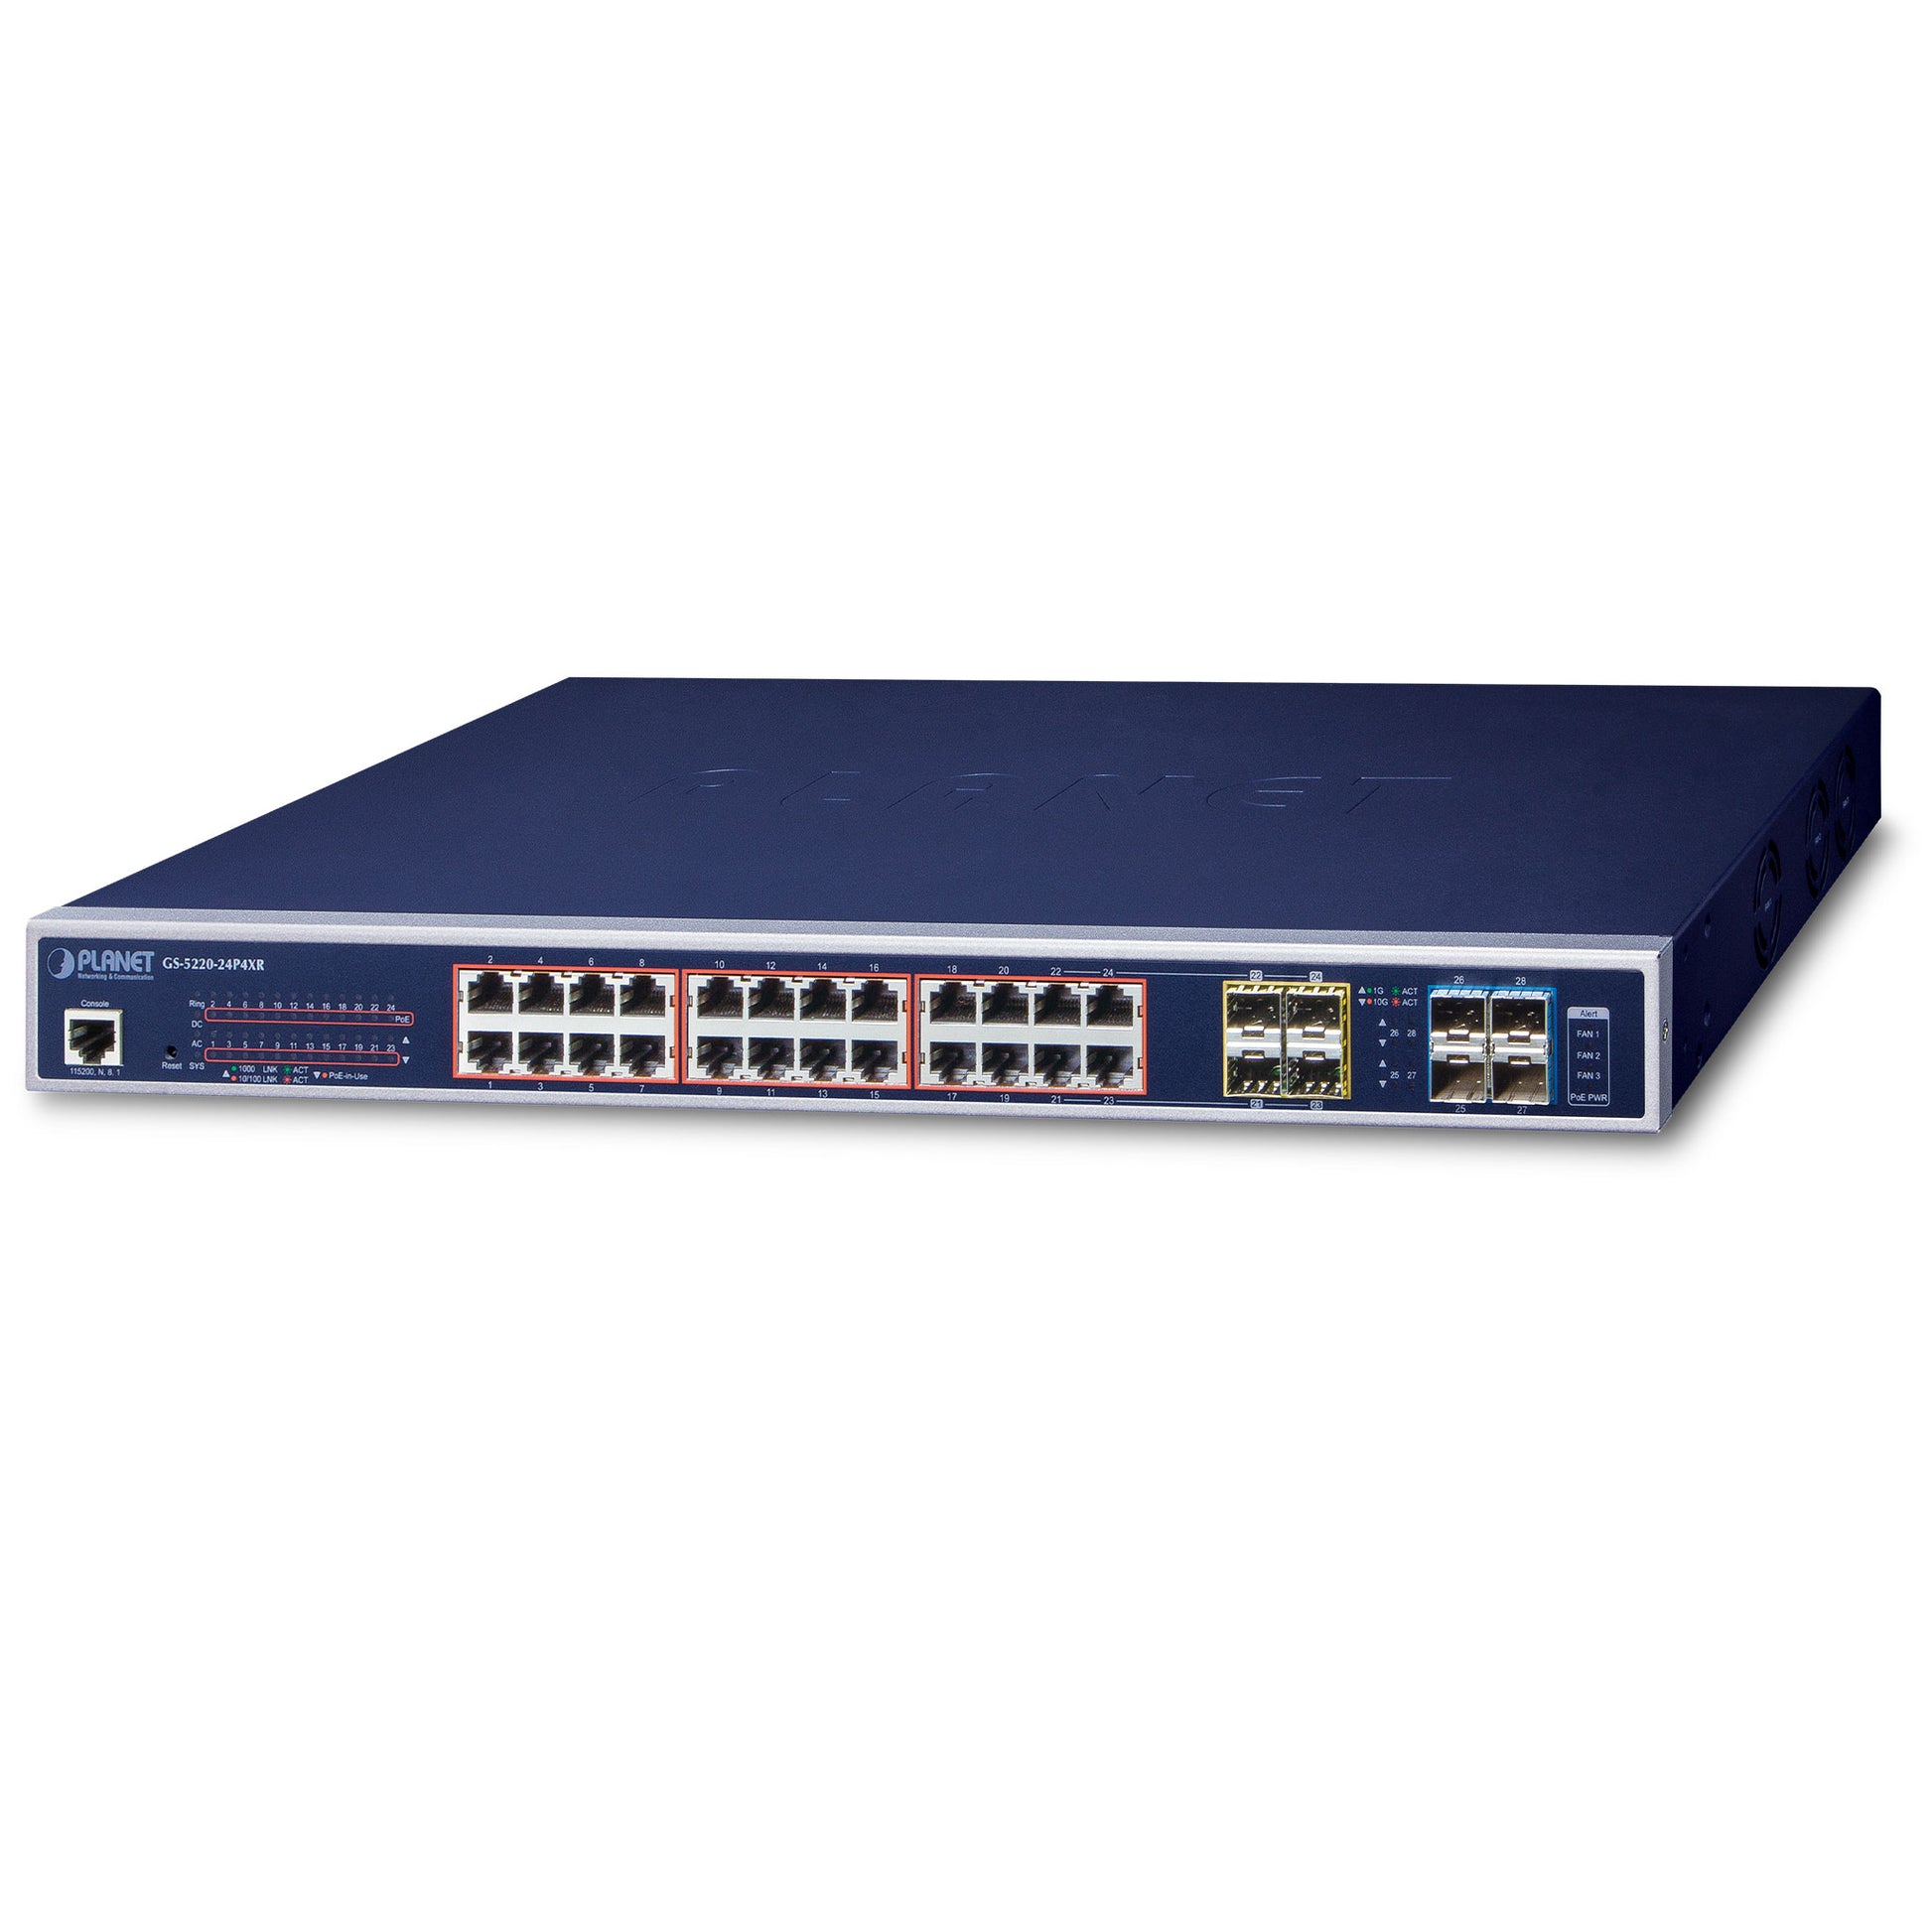  TP-Link 24 Port gigabit PoE switch, 24 PoE+ Port @192W, w/ 4  SFP Slots, Smart Managed, Limited Lifetime Protection, Support L2/L3/L4  QoS, IGMP and LAG